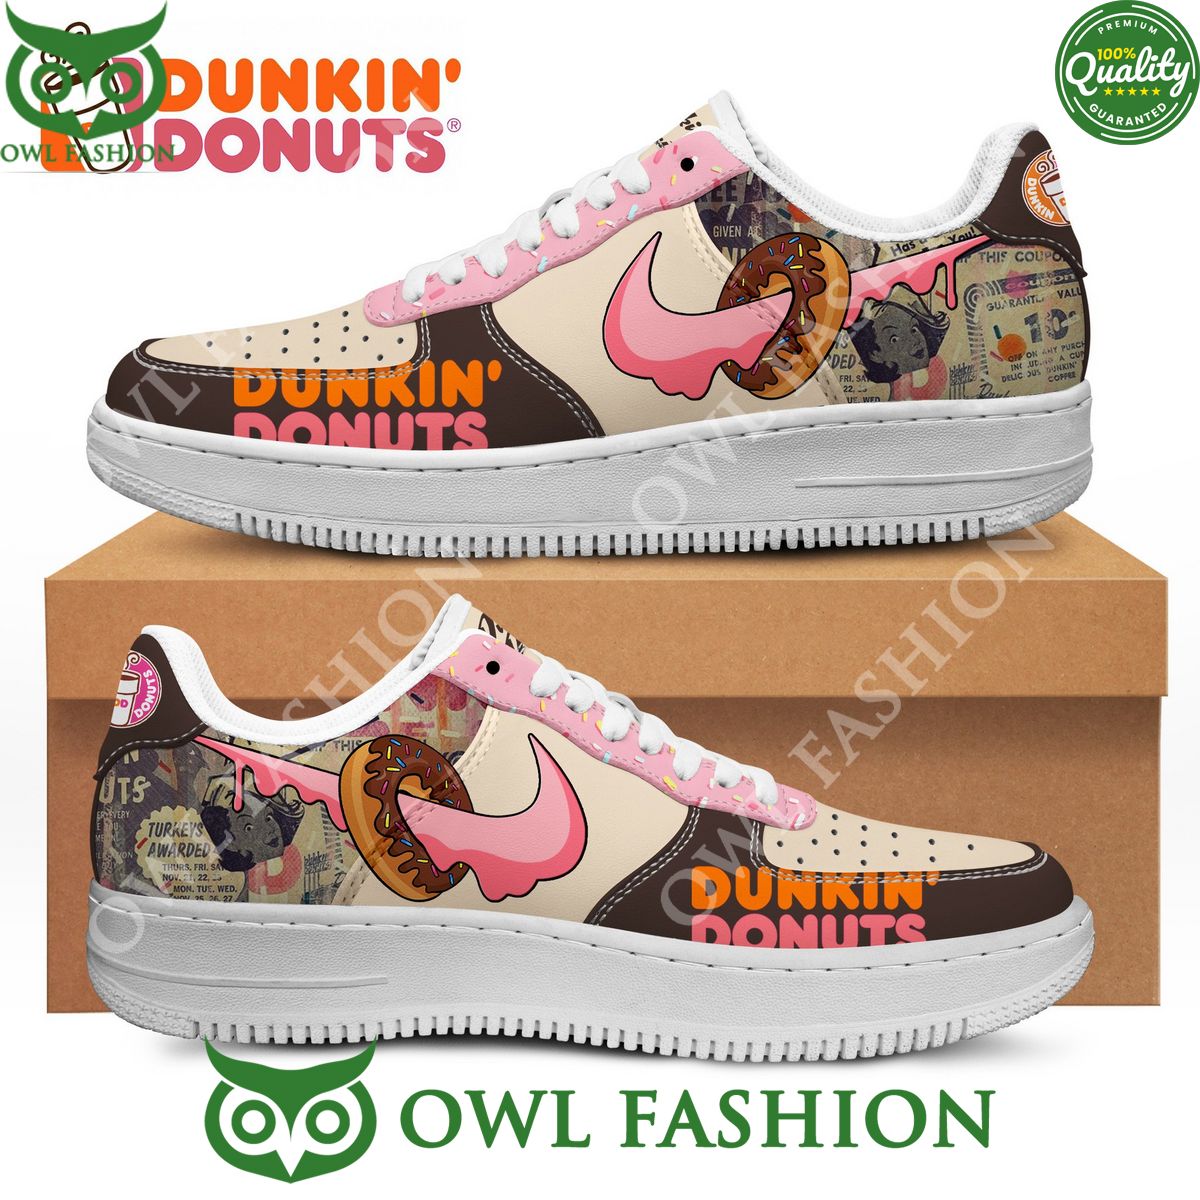 dunkin donuts american multinational coffee and doughnut company air force shoes 1 eeaKO.jpg